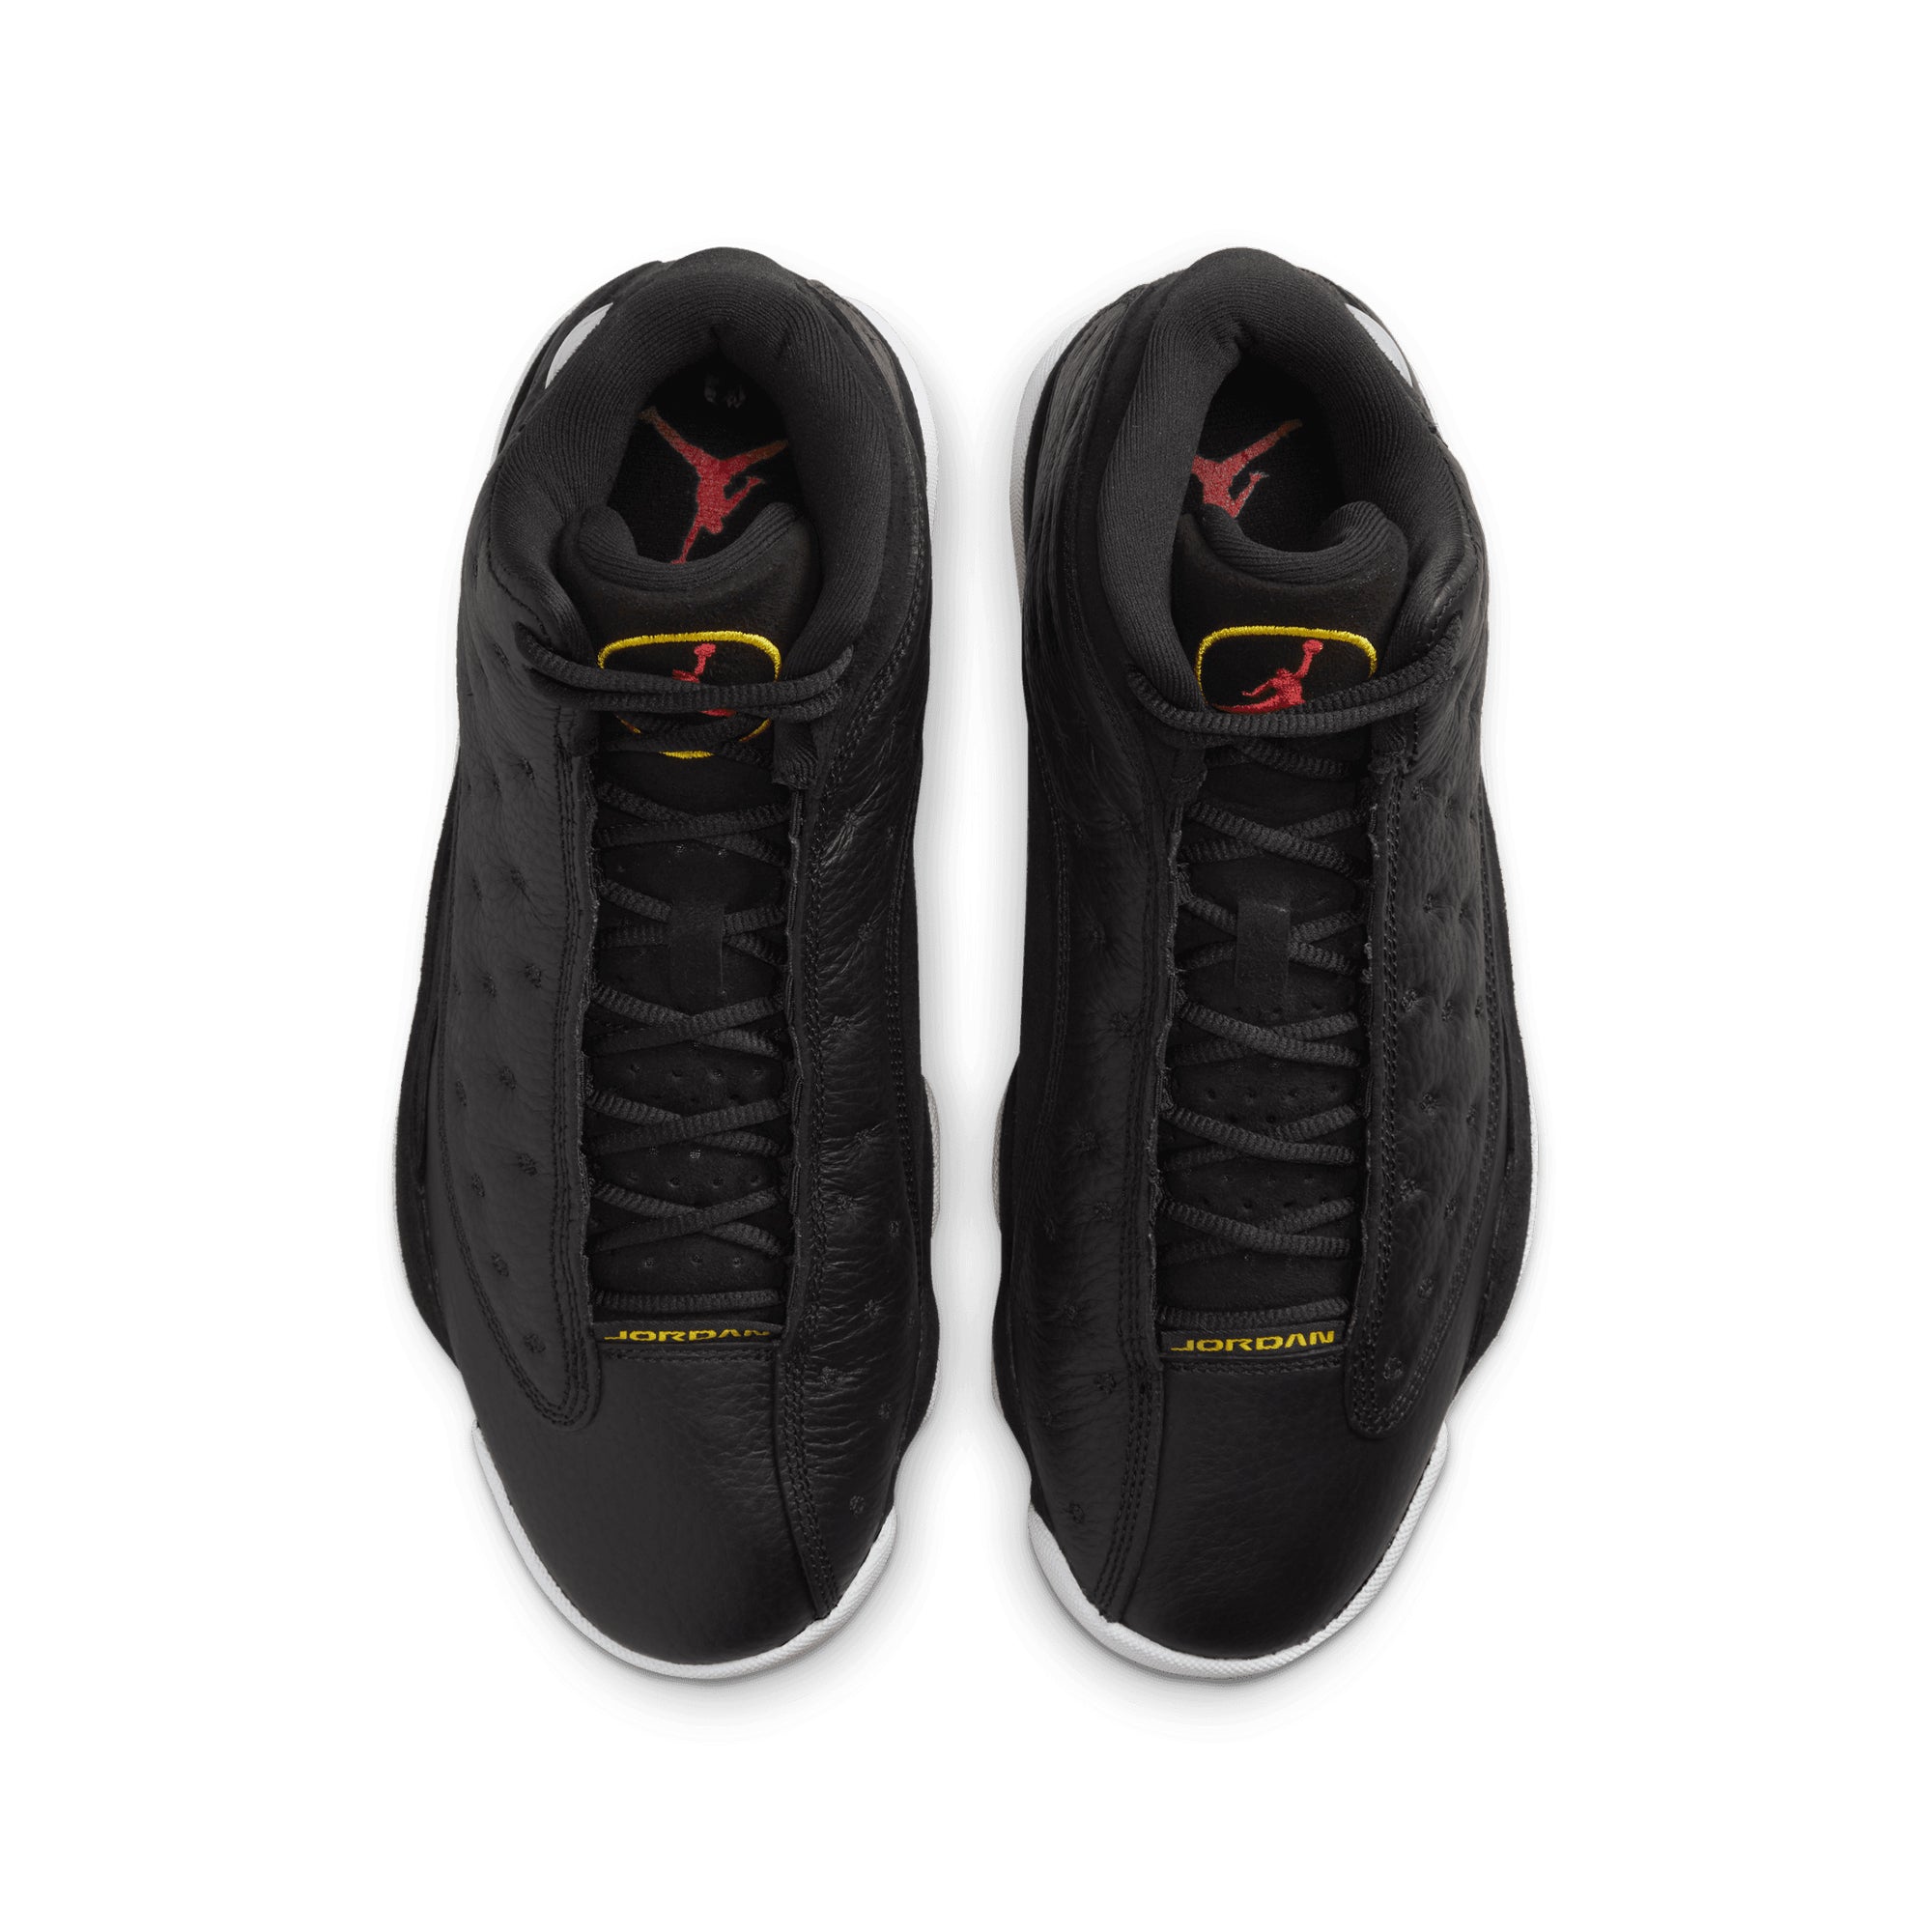 Louis Vuitton Supreme Black Red Air Jordan 13 Sneaker shoes